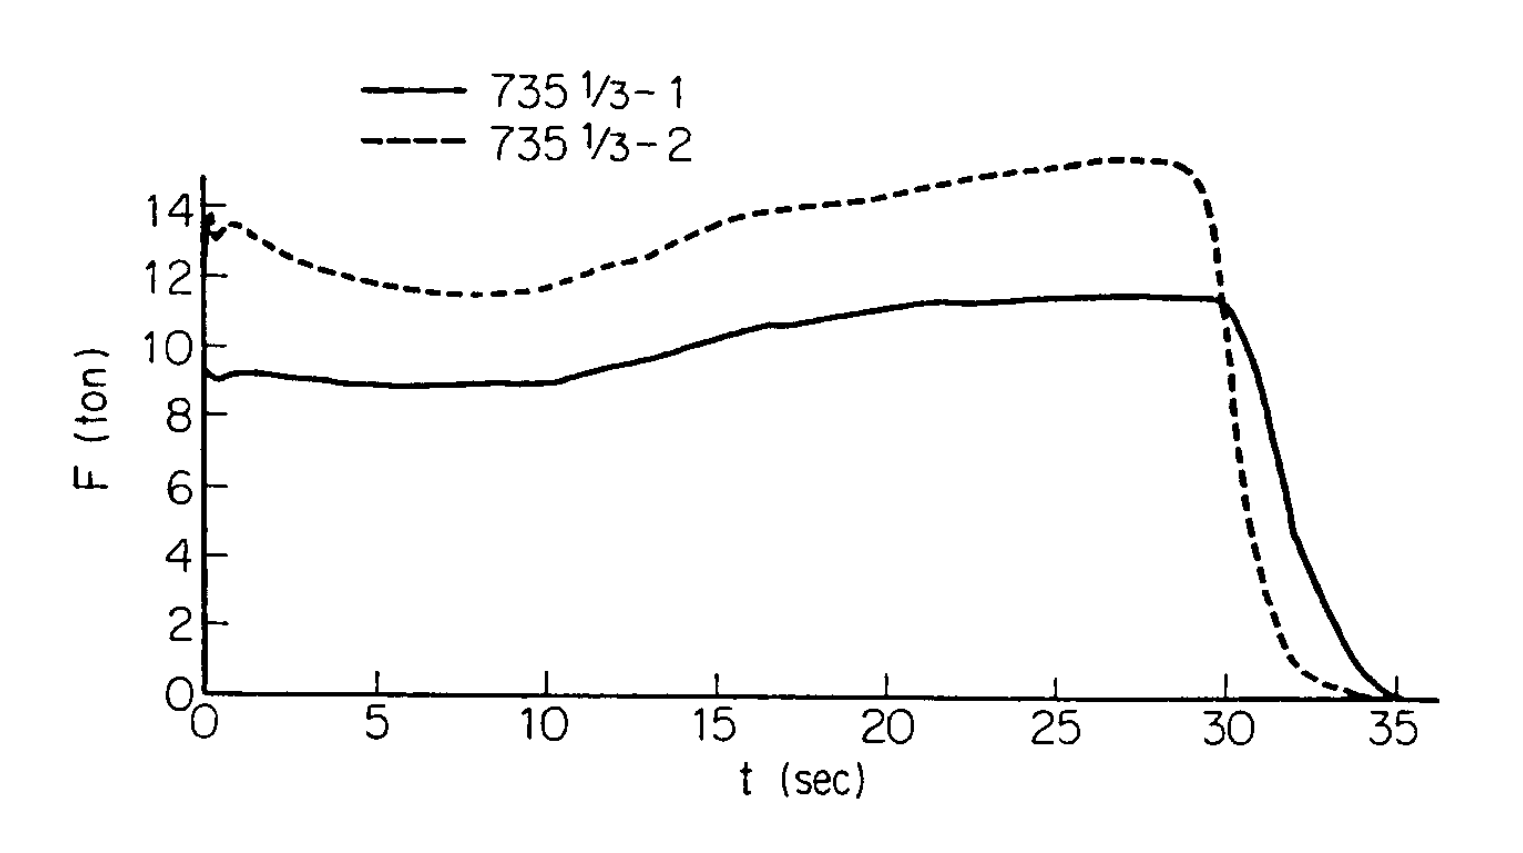 Photocopied chart: Lambda third stage  thrust curve